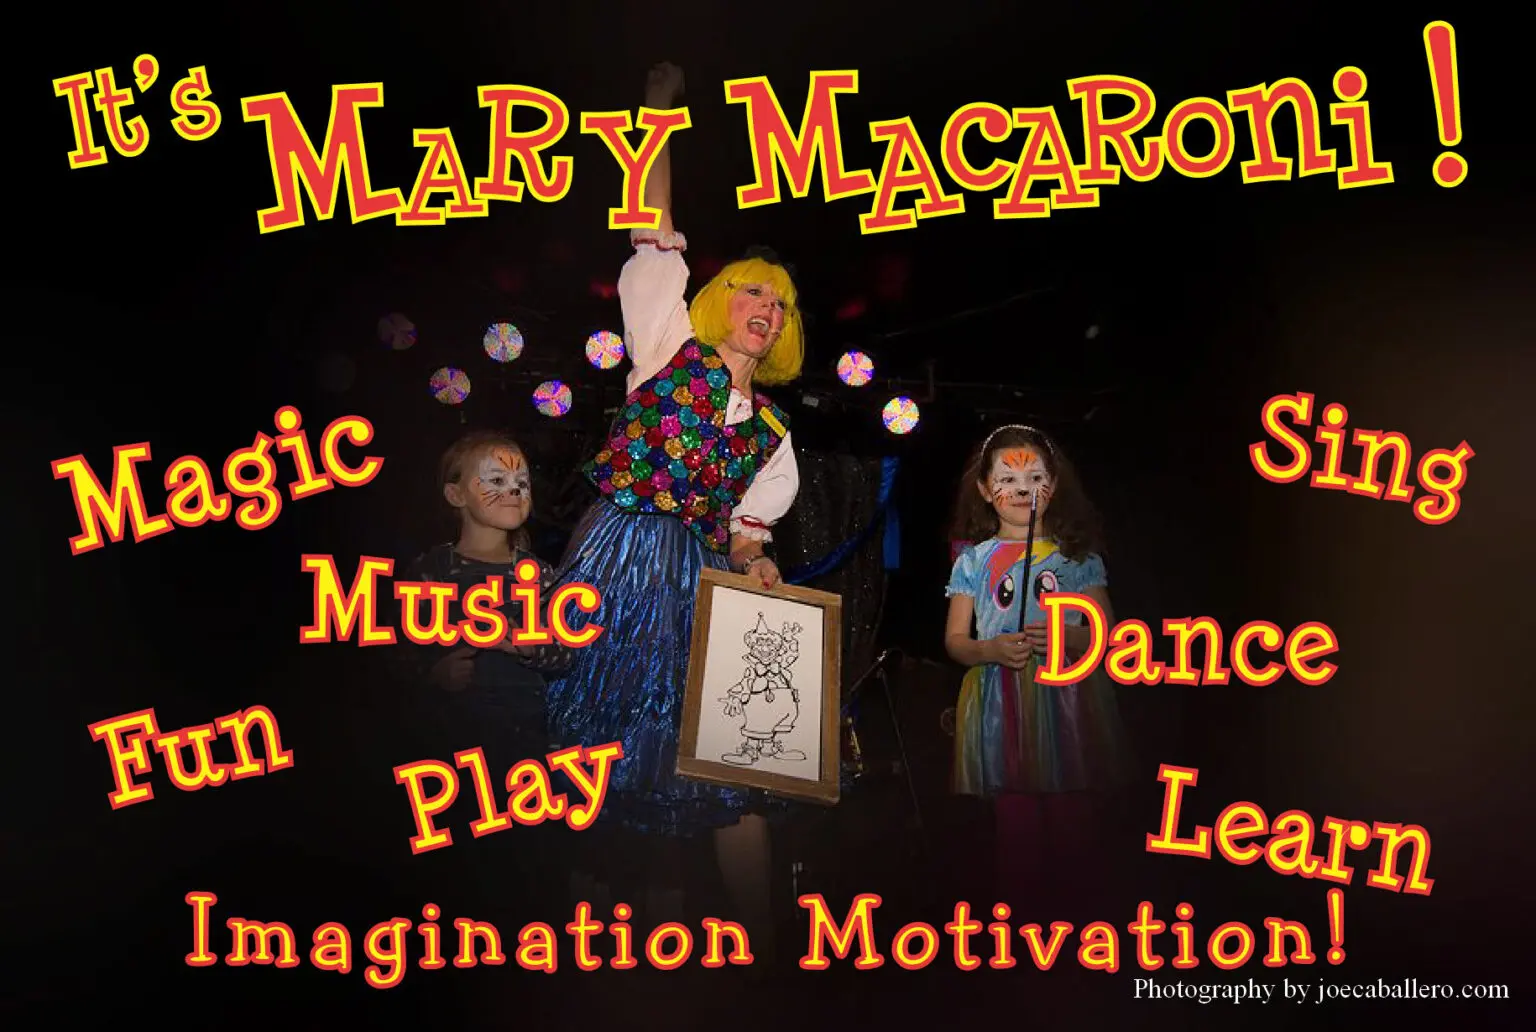 Mary Macaroni postcard says "It's Mary Macaroni! magic, music, fun, play, sing, dance, learn, imagination motivation"